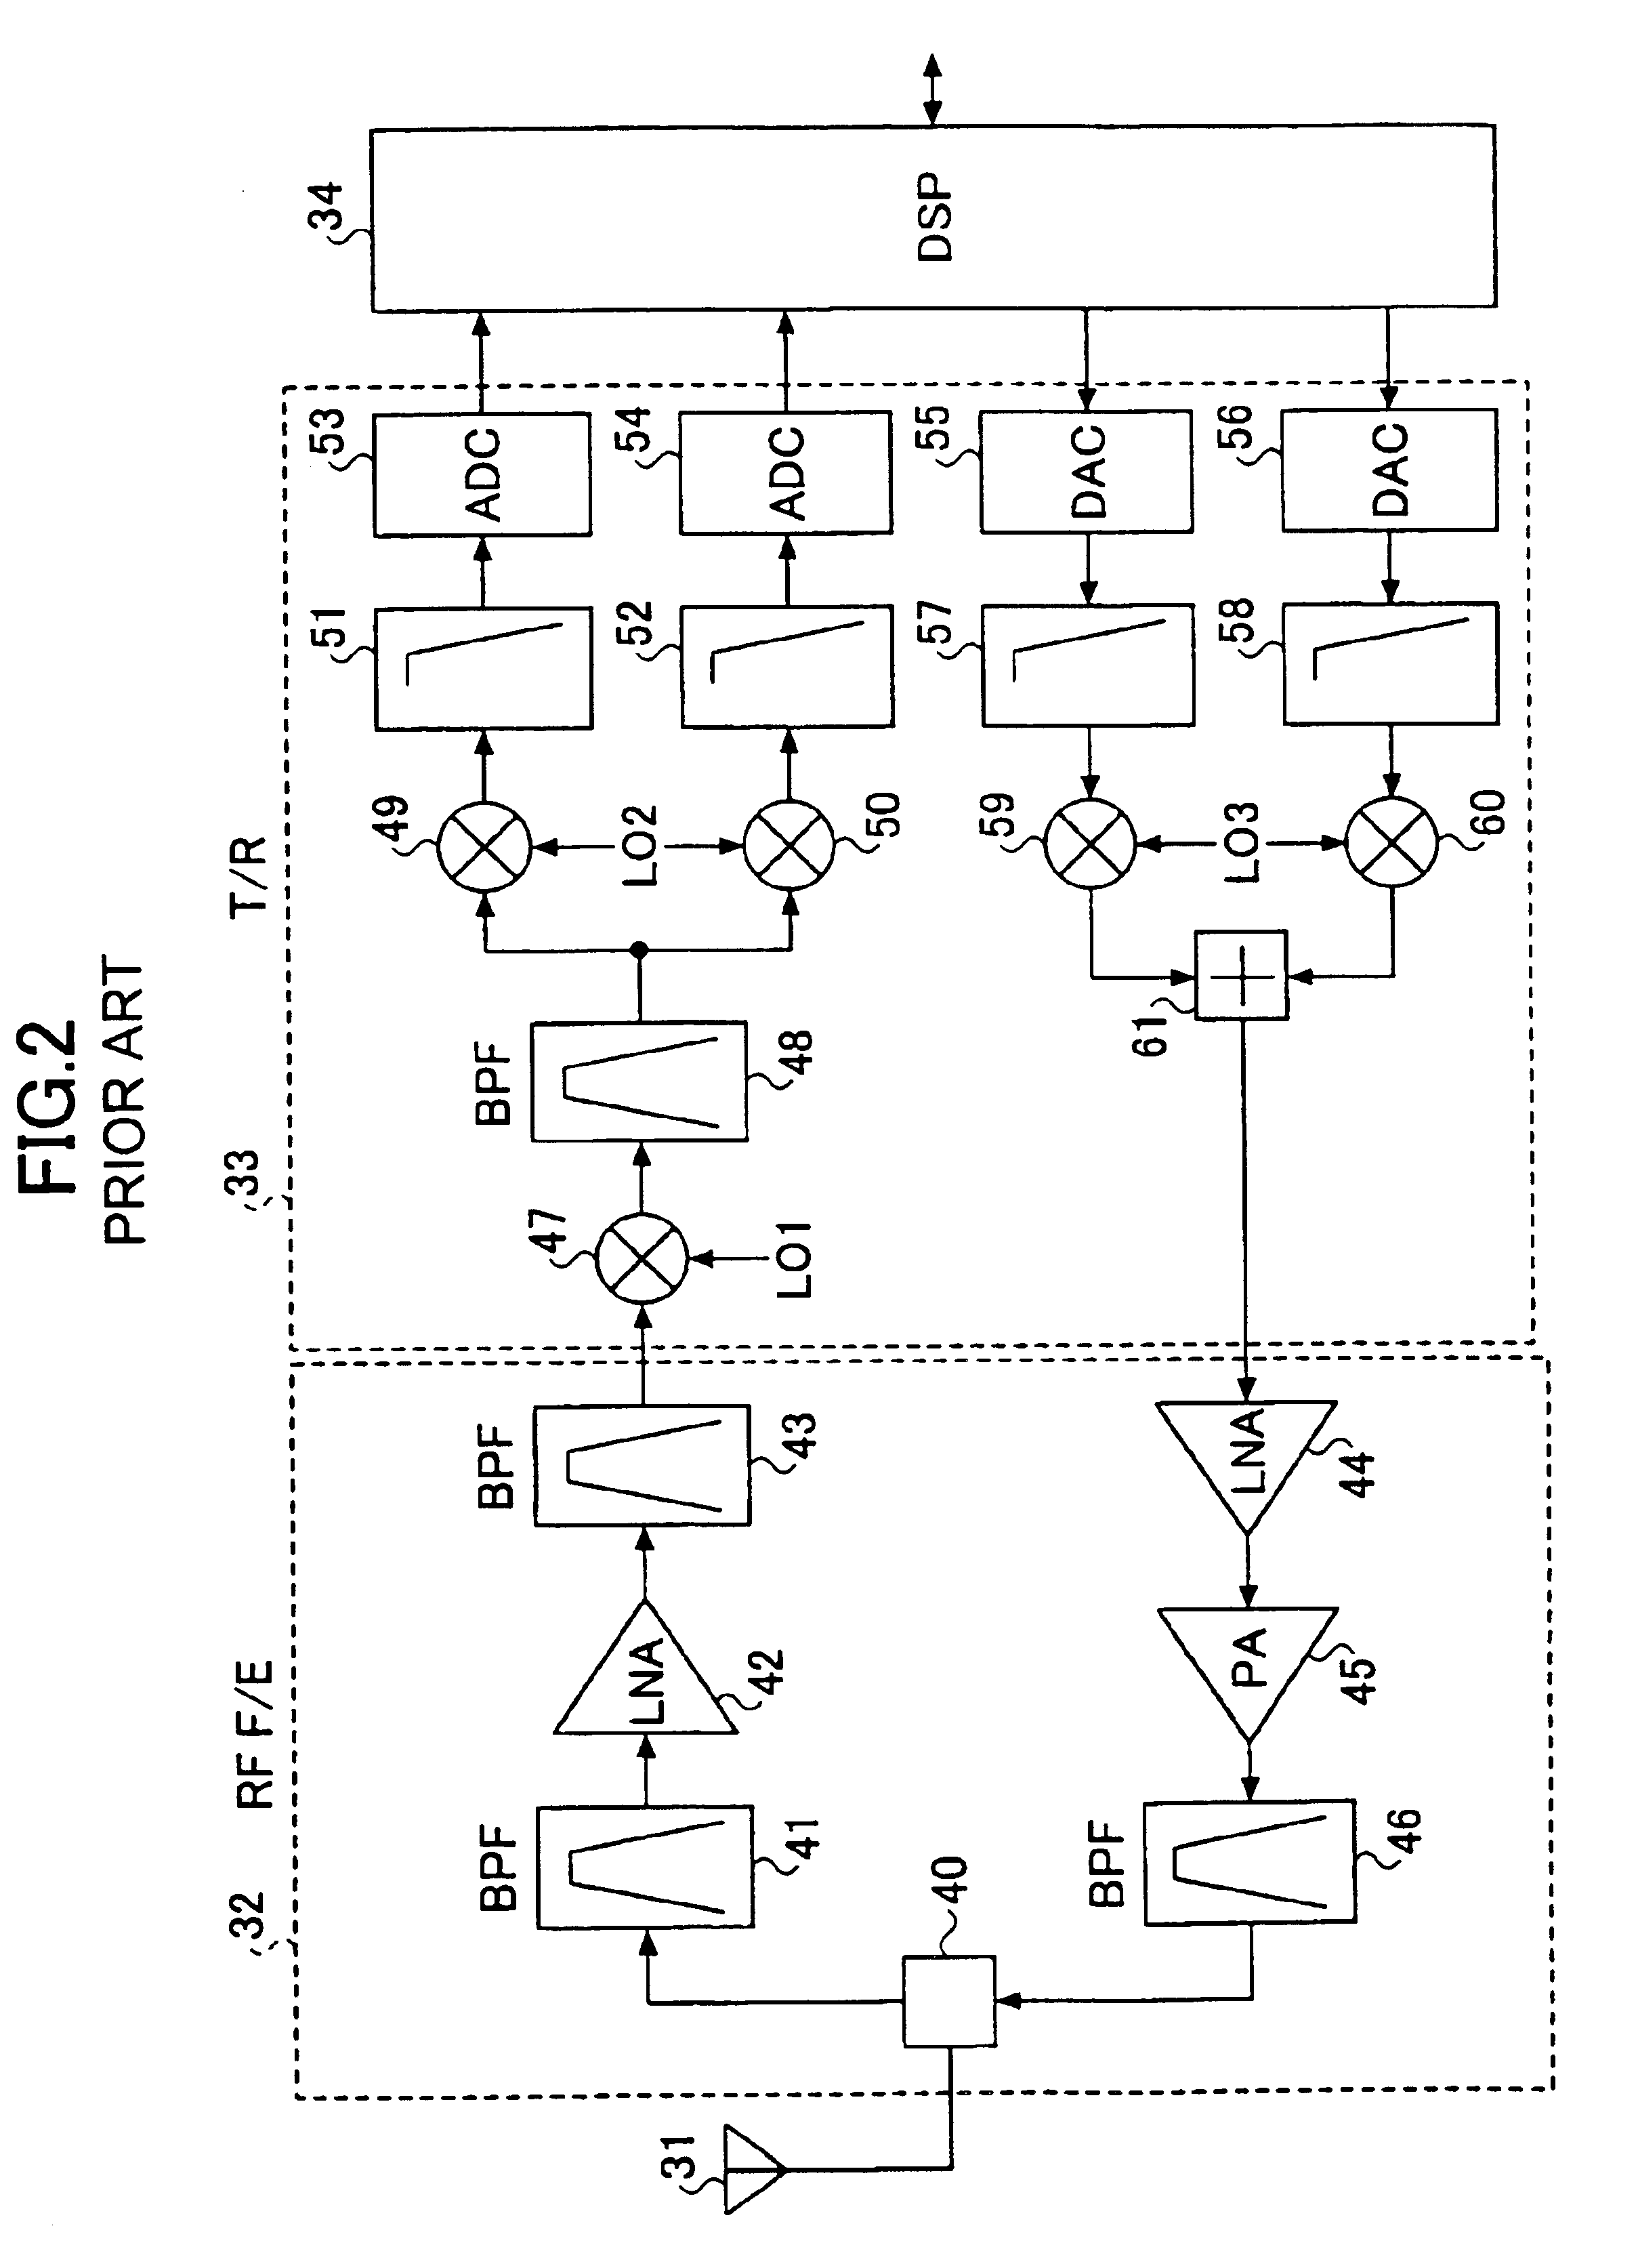 Adaptive antenna unit and terminal equipment